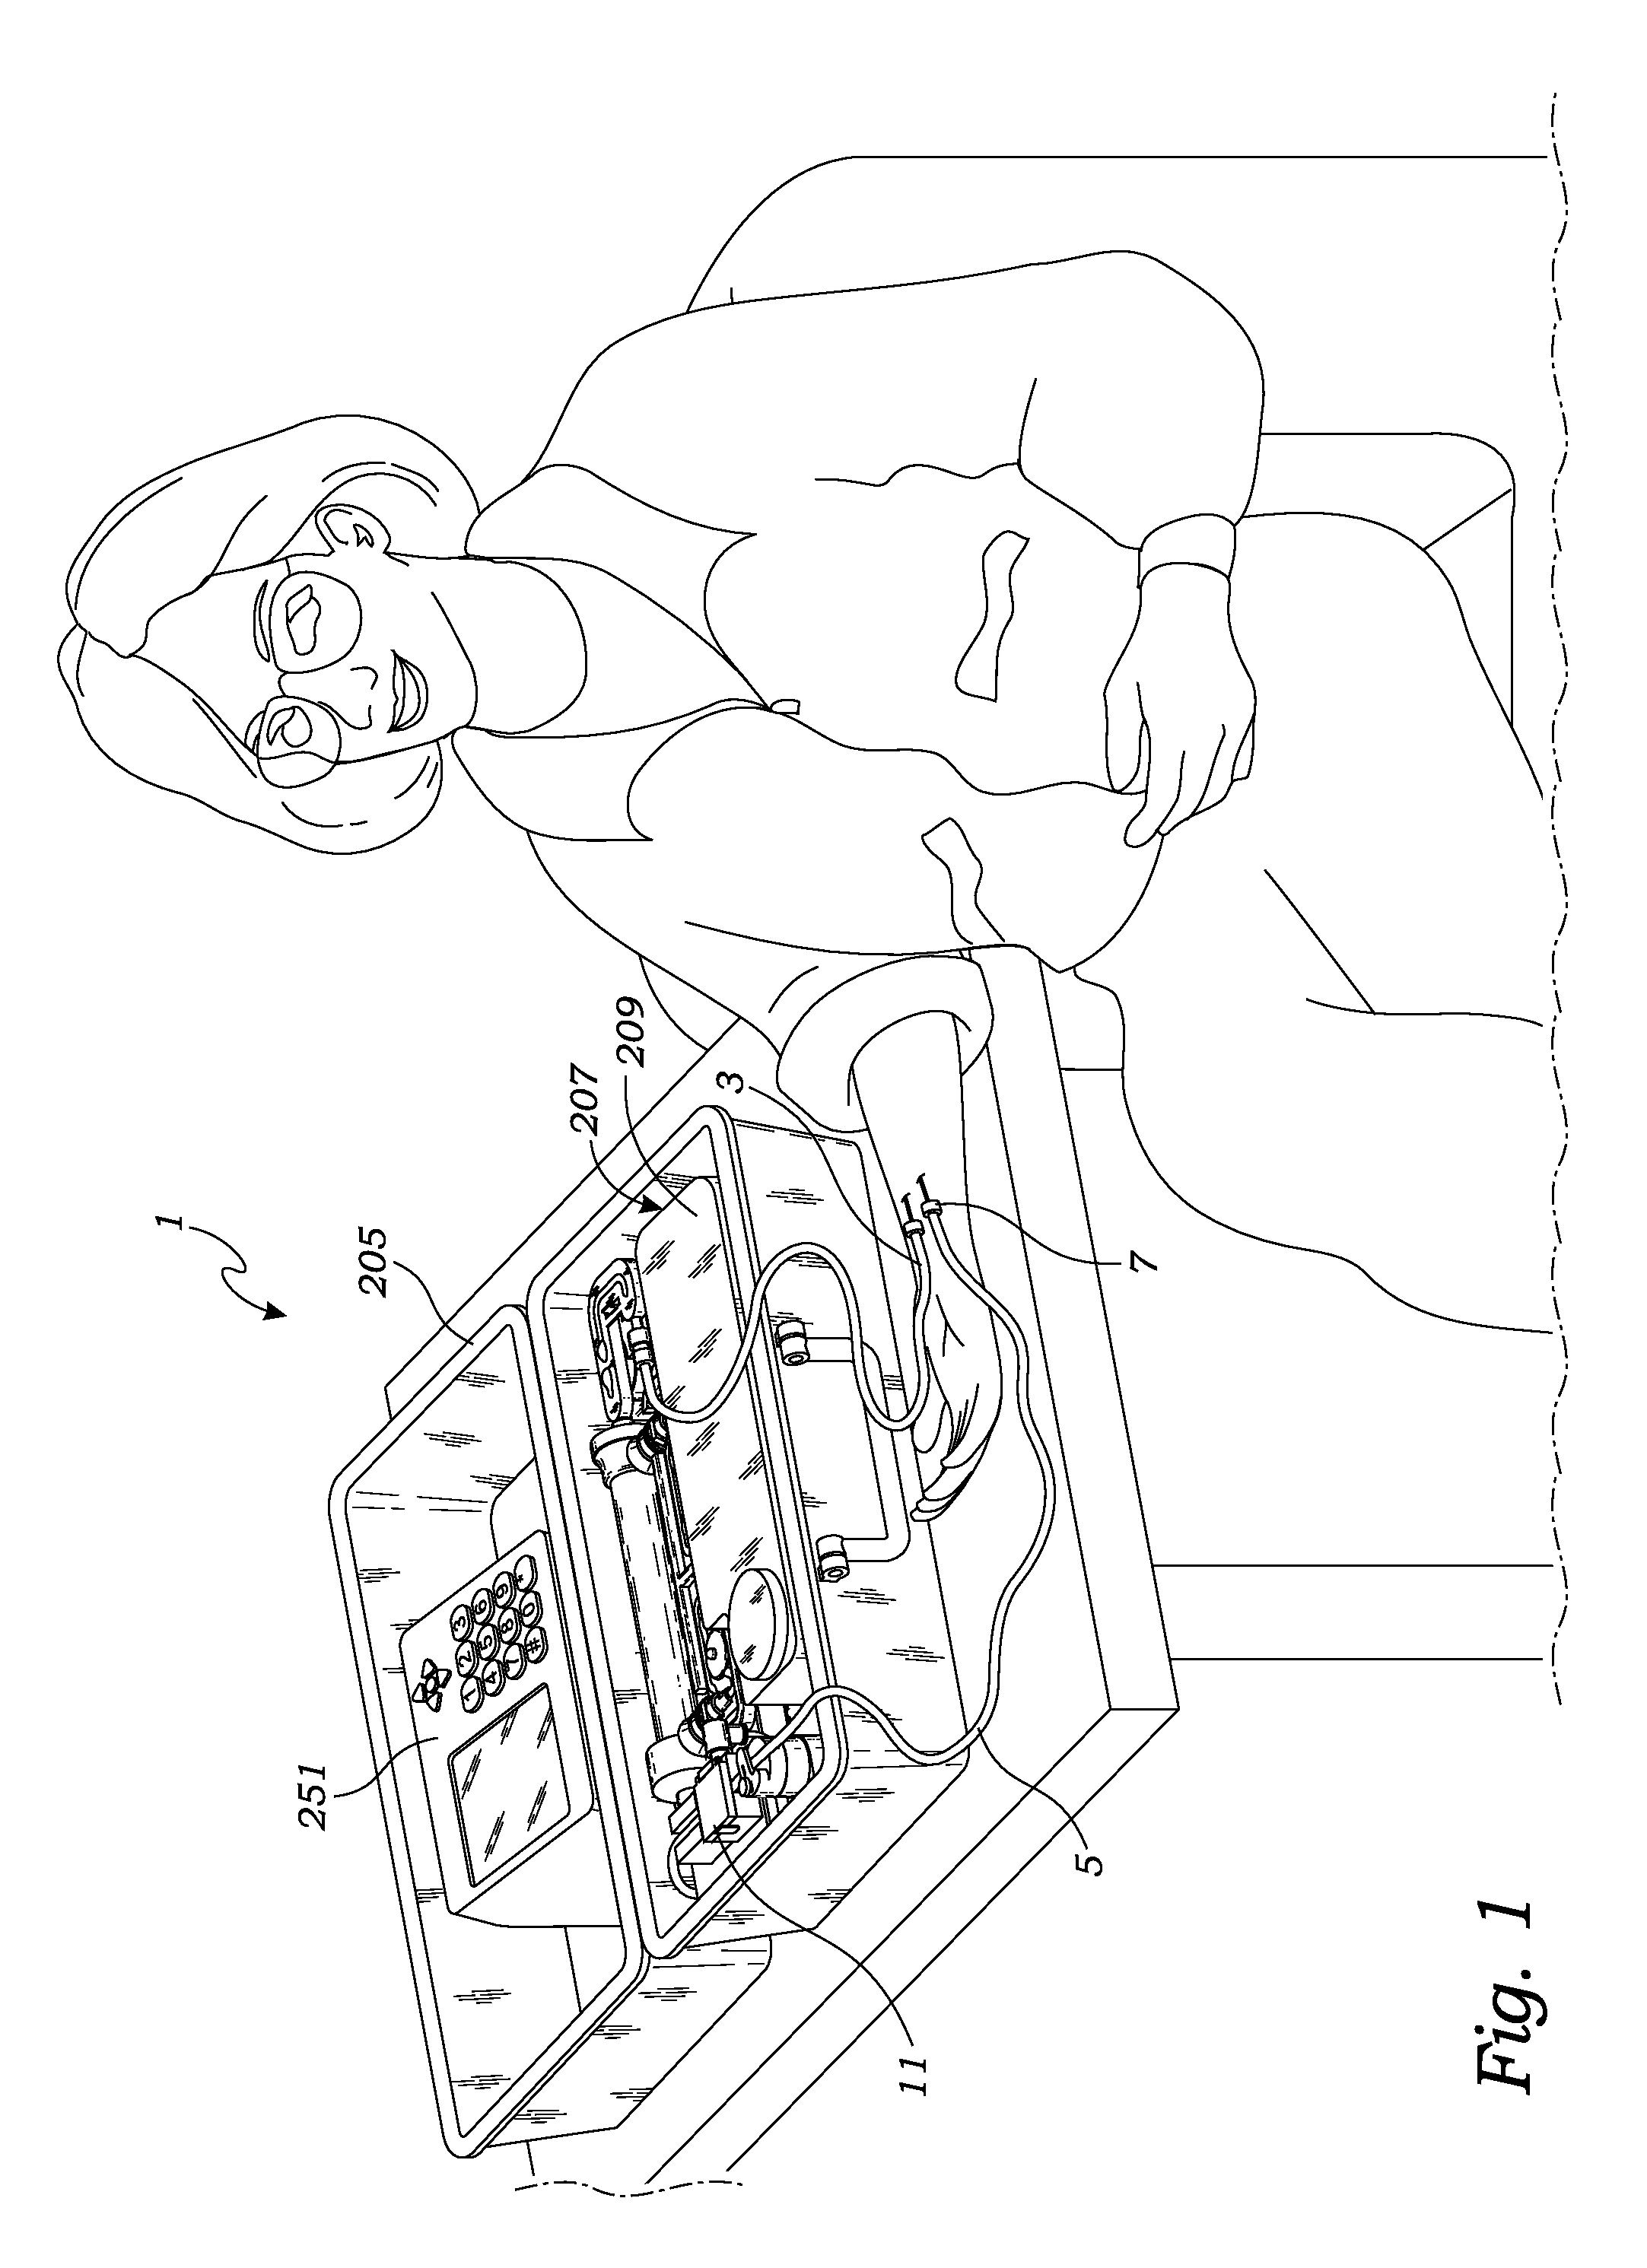 Portable hemodialysis machine and disposable cartridge